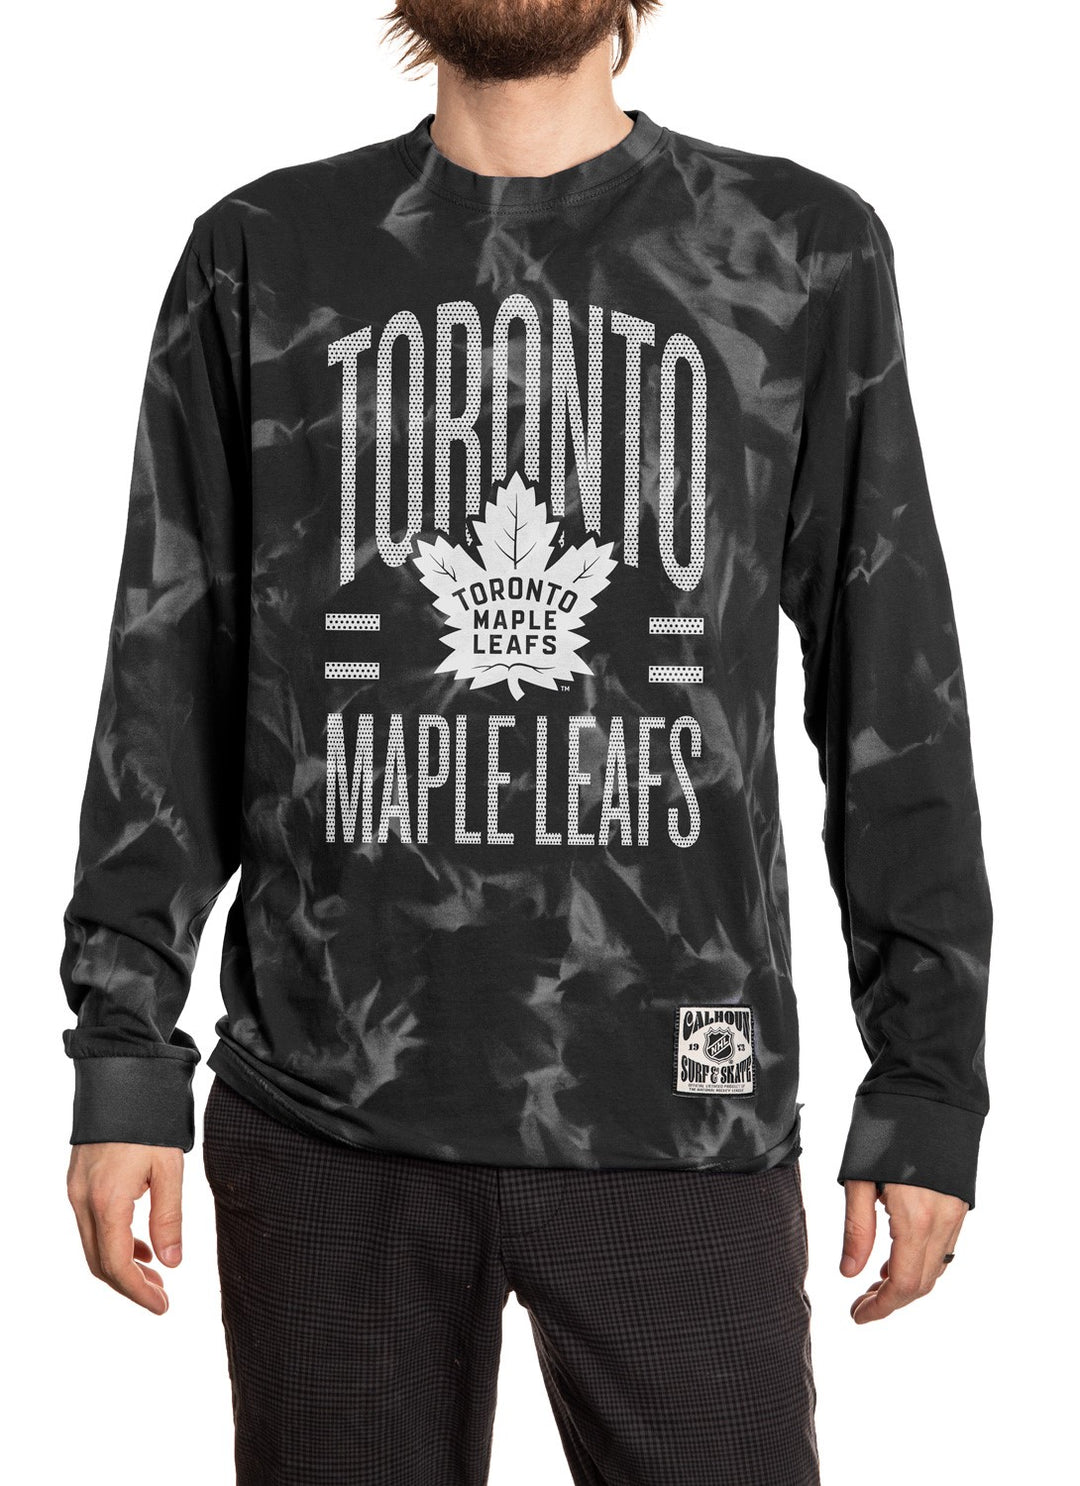 Toronto Maple Leafs Crystal Tie Dye Long Sleeve Shirt - Black Edition